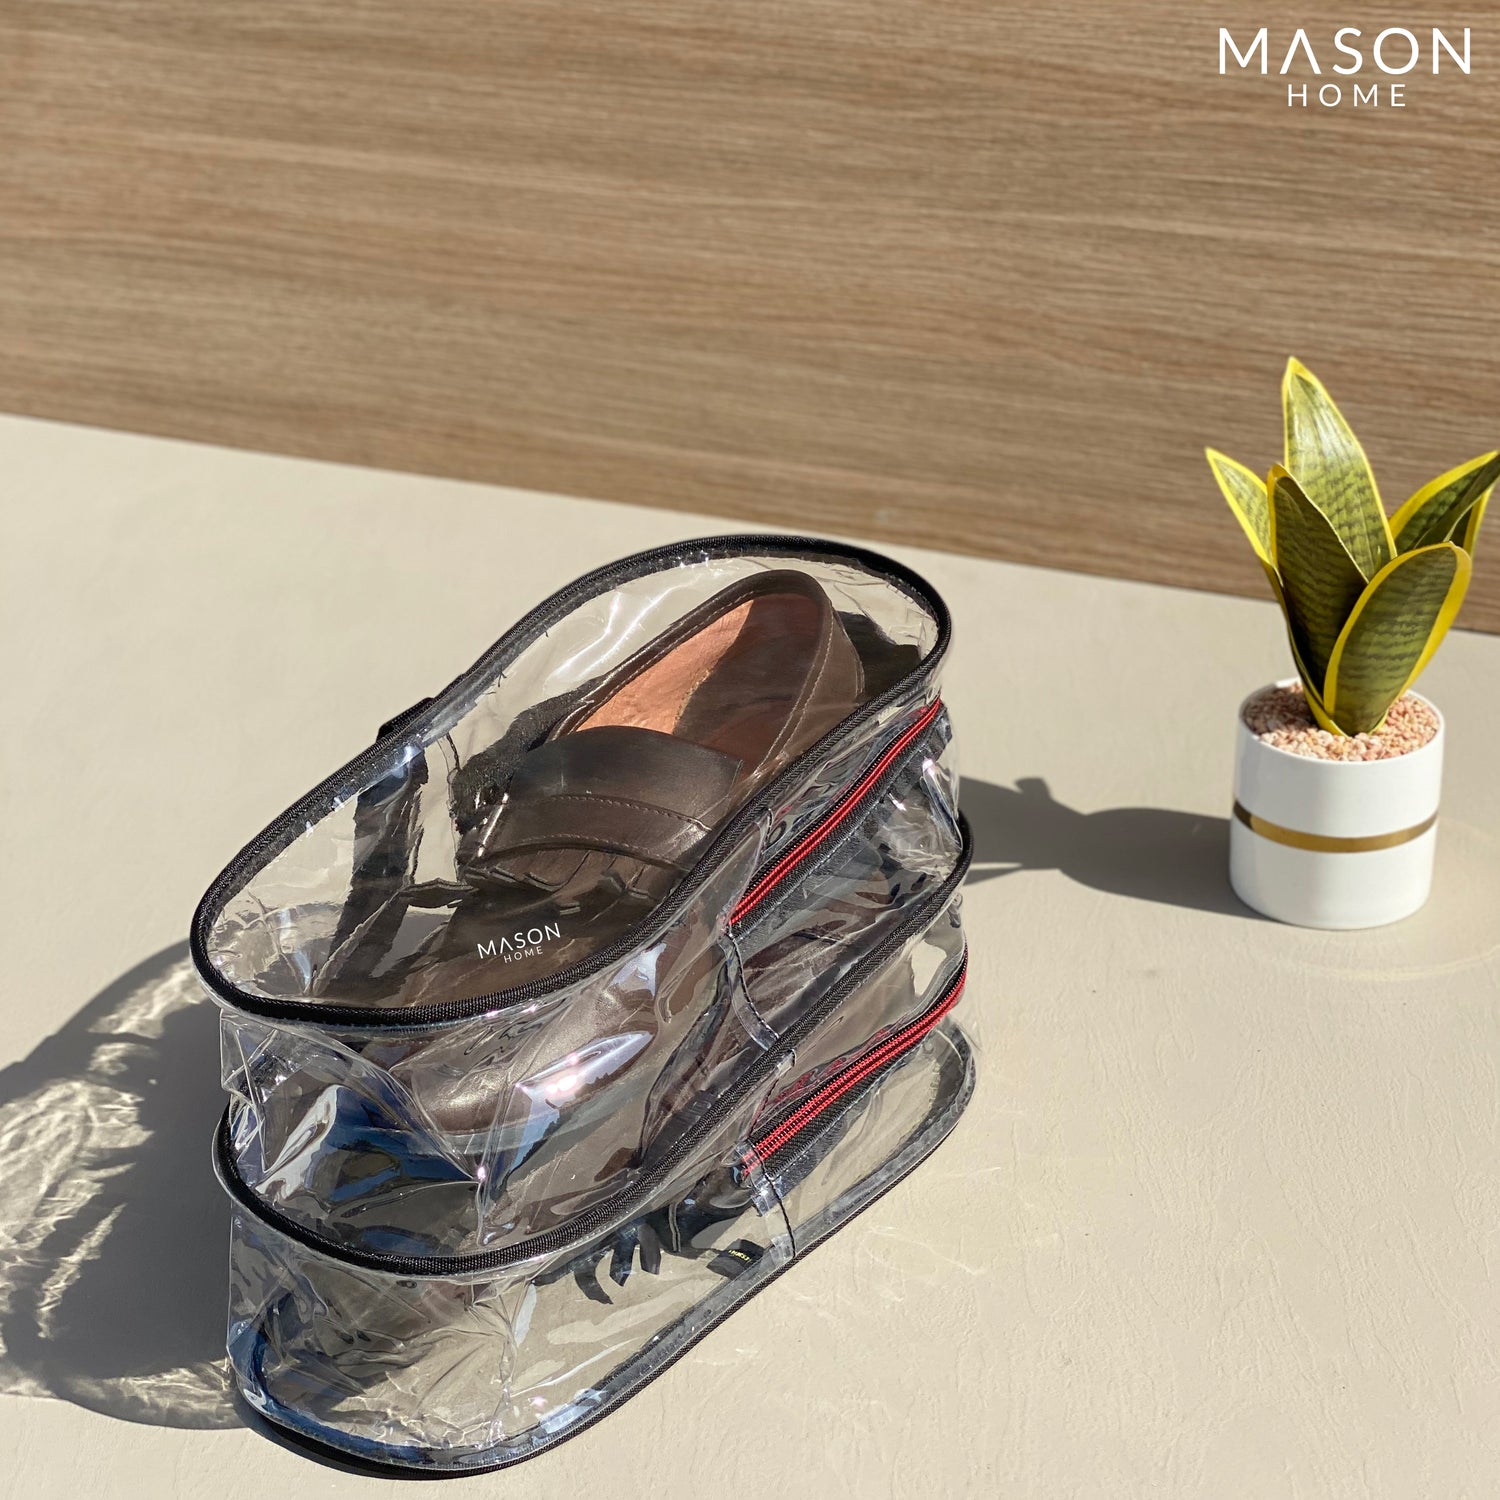 PREMIUM SHOE COVERS - Mason Home by Amarsons - Lifestyle &amp; Decor